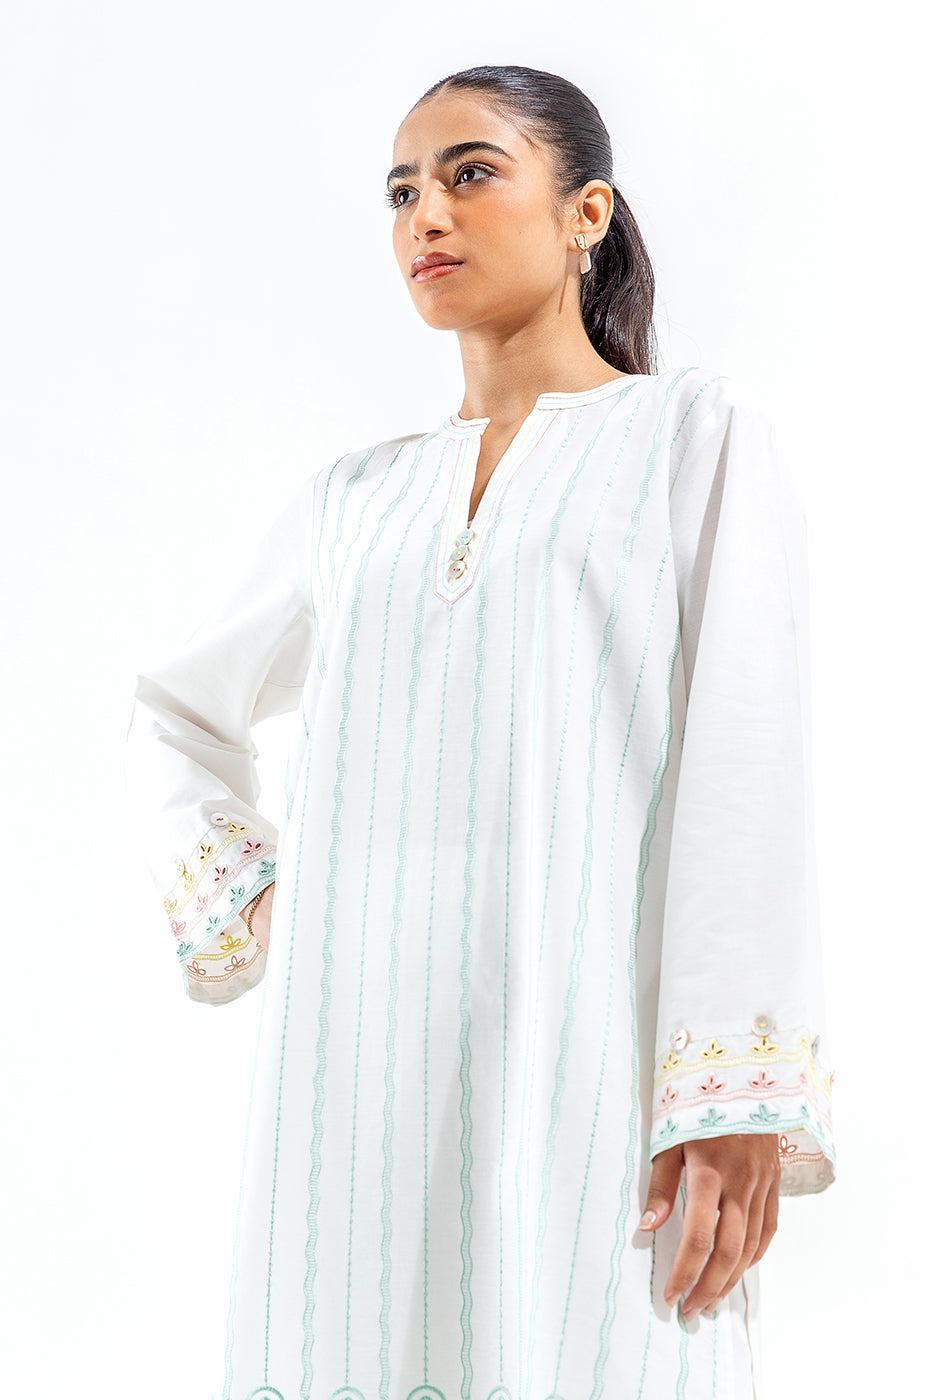 Simple White Pakistani Dress | fincalosgigantes.com